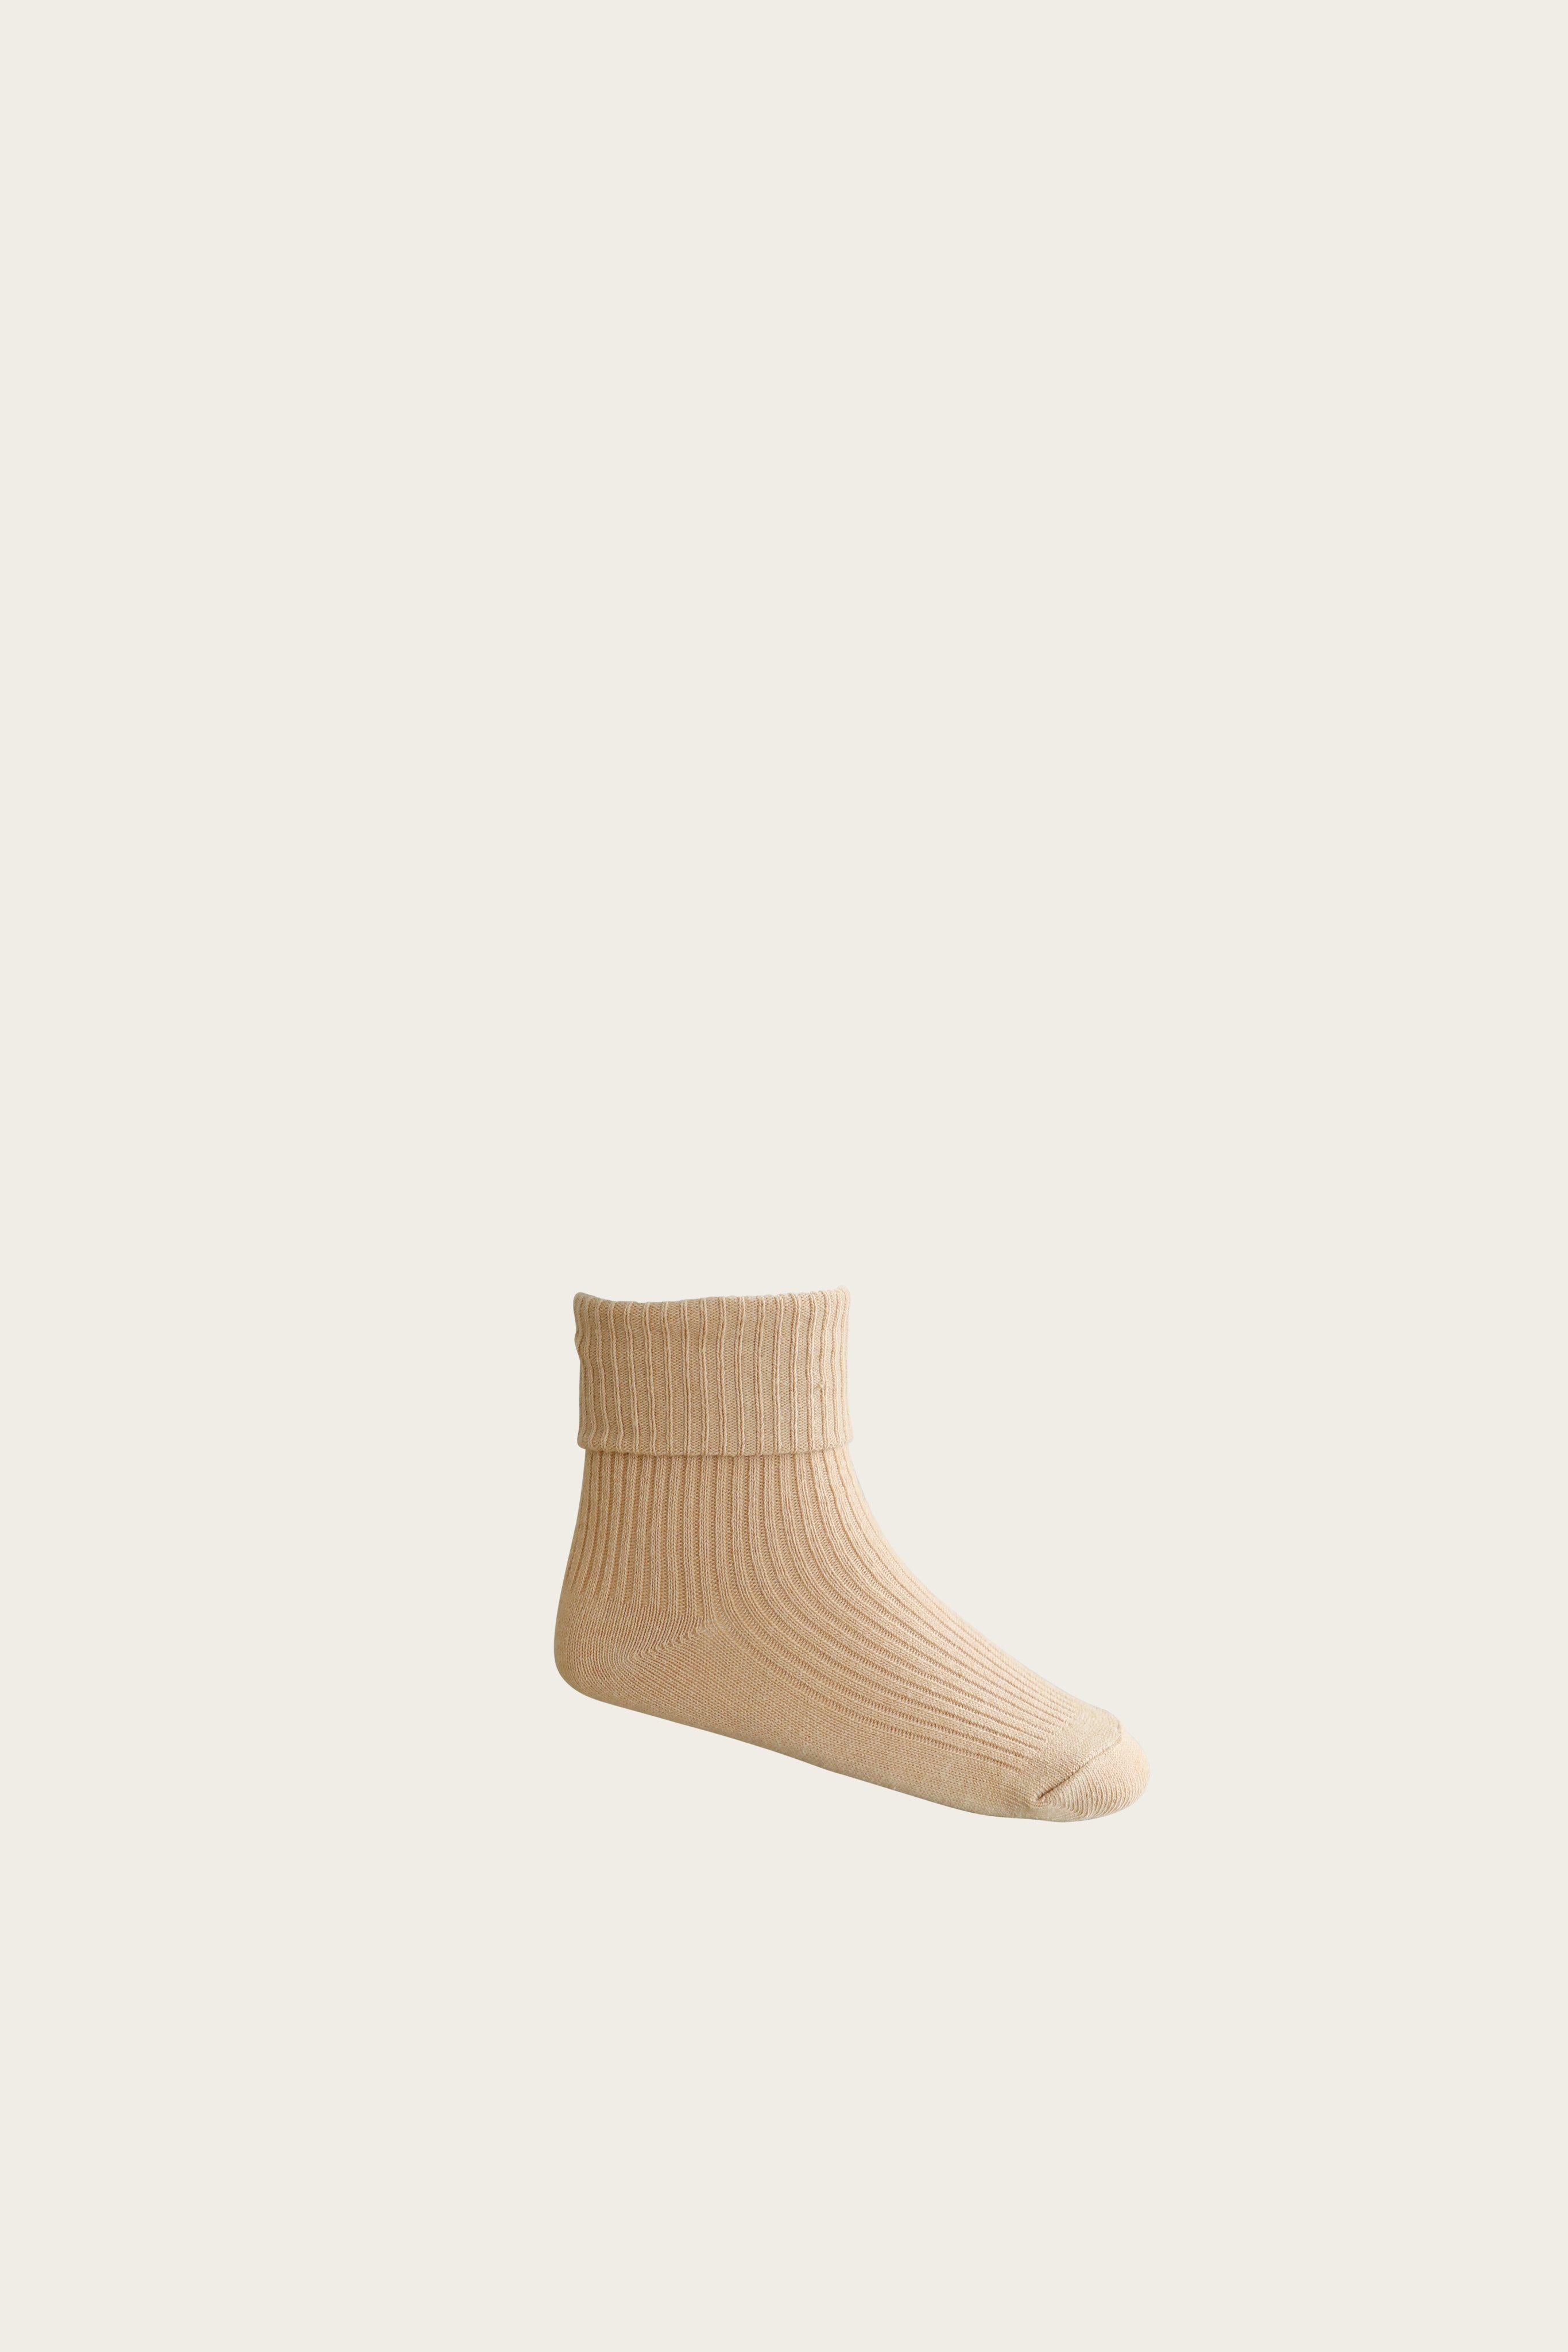 Ribbed Socks - Croissant-Shoes & Socks-Jamie Kay-The Bay Room